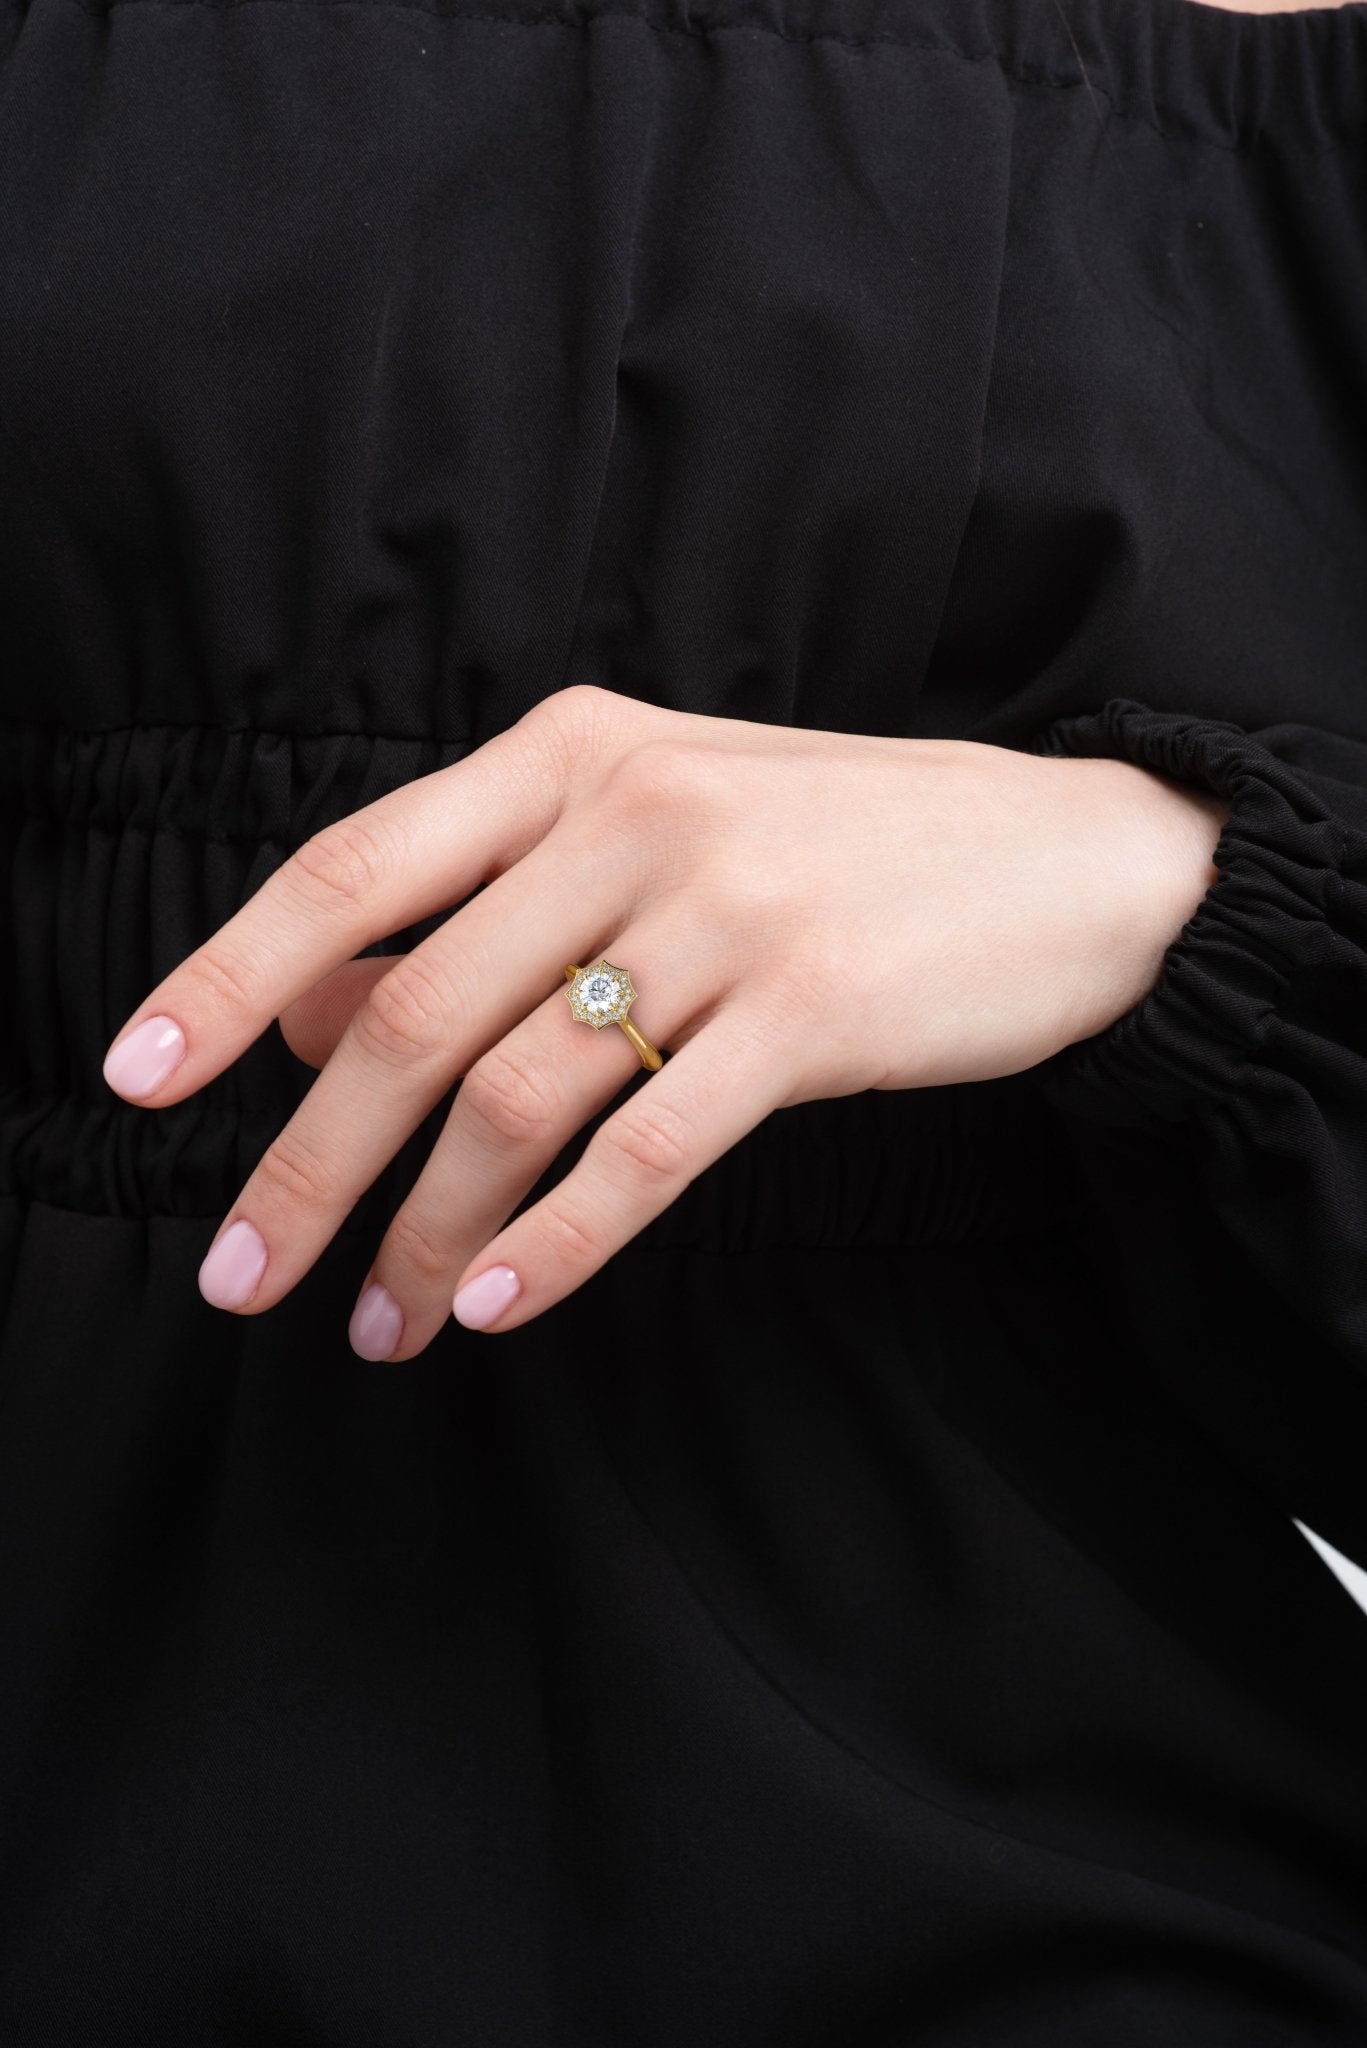 Unique Engagement Ring Spiderweb Style - The Weaver RingEngagement RingLVII Fine Jewelry